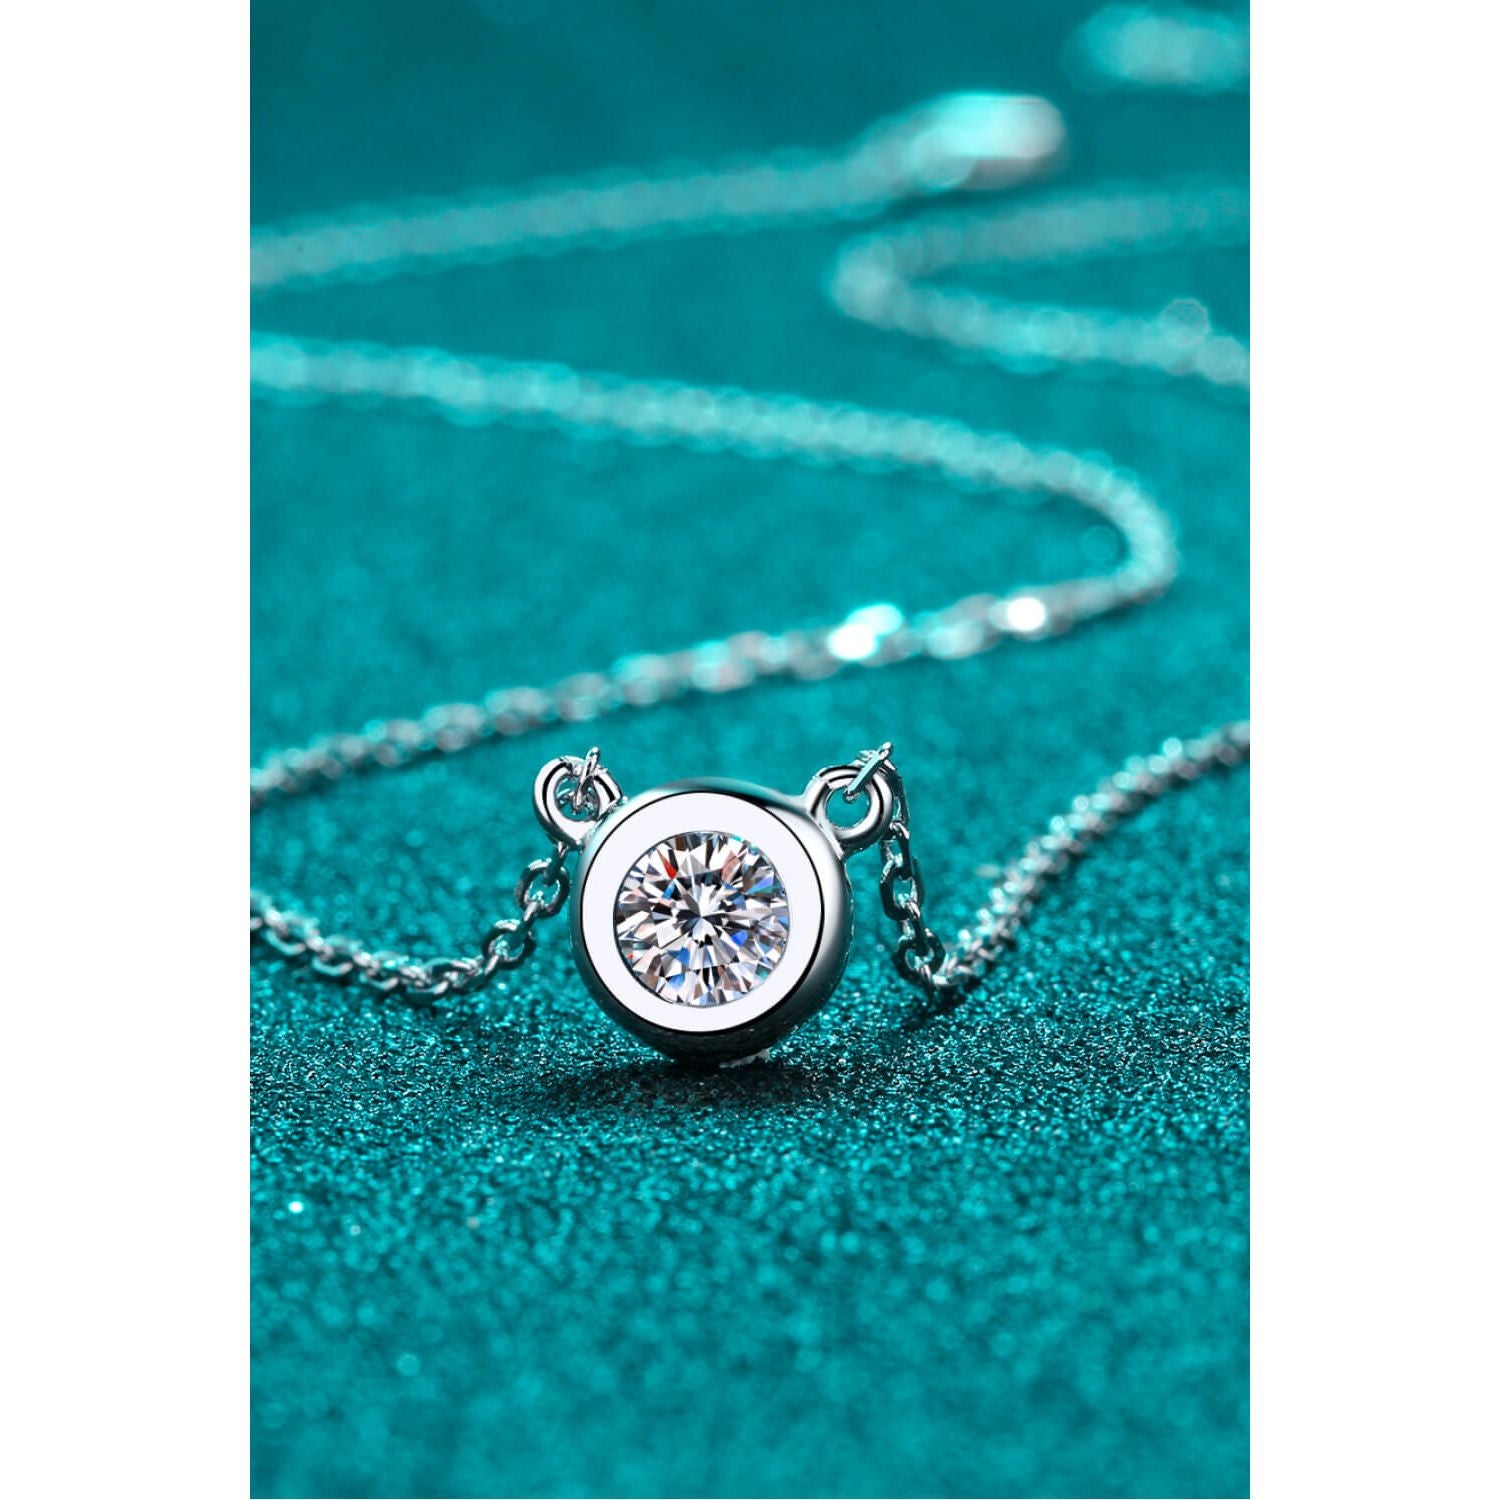 Moissanite Round Pendant Chain Necklace - TiffanyzKlozet